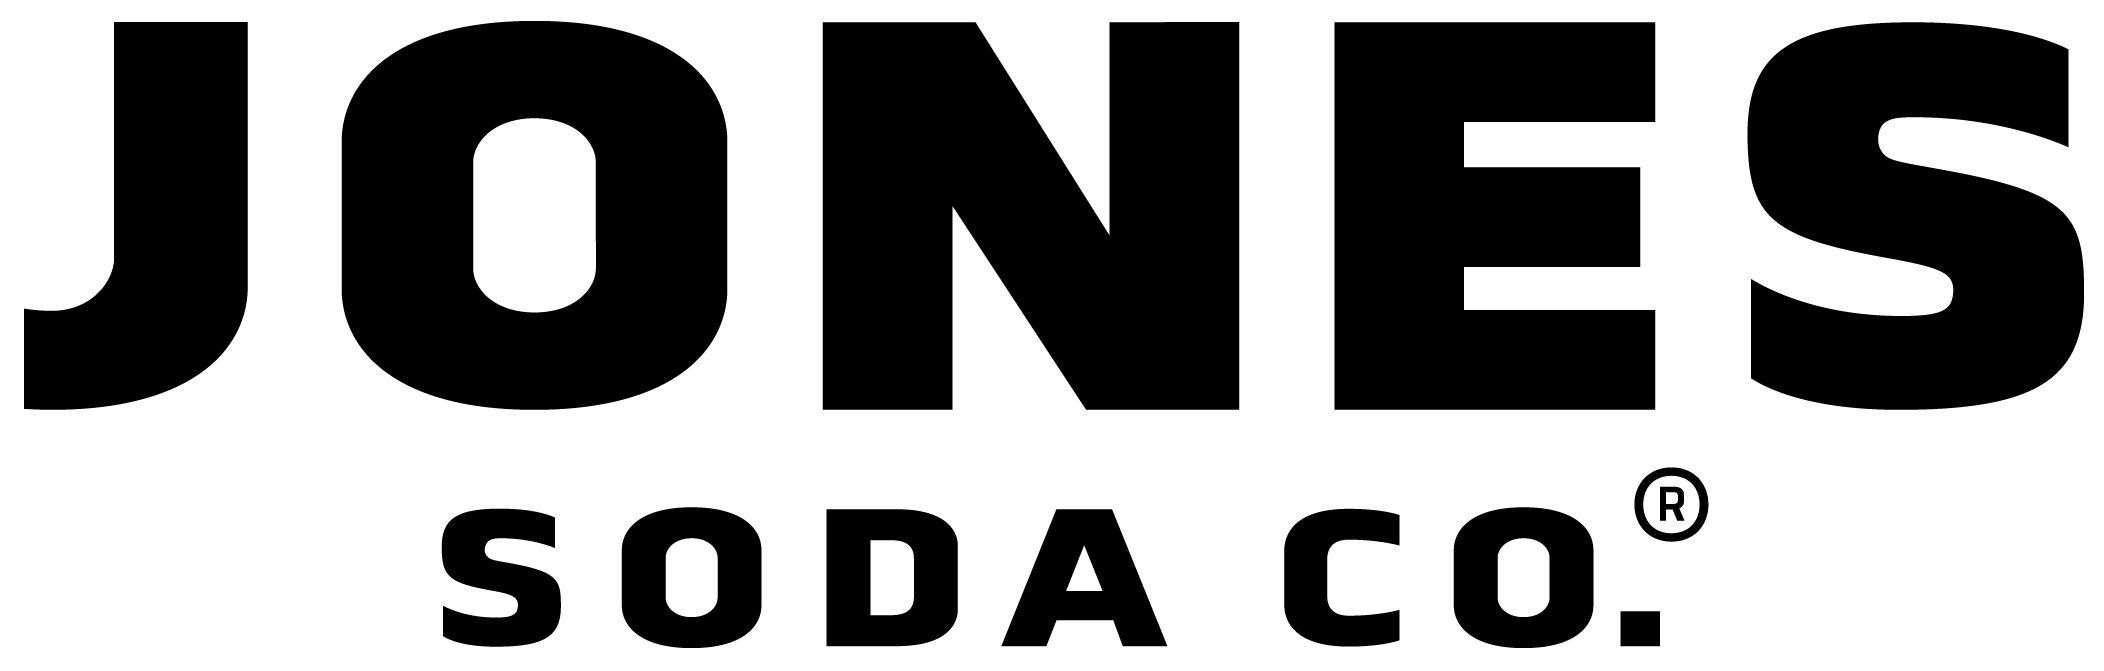 Jones Soda Logo - Jones Soda Co. Launches Natural Jones Soda in California | Business Wire